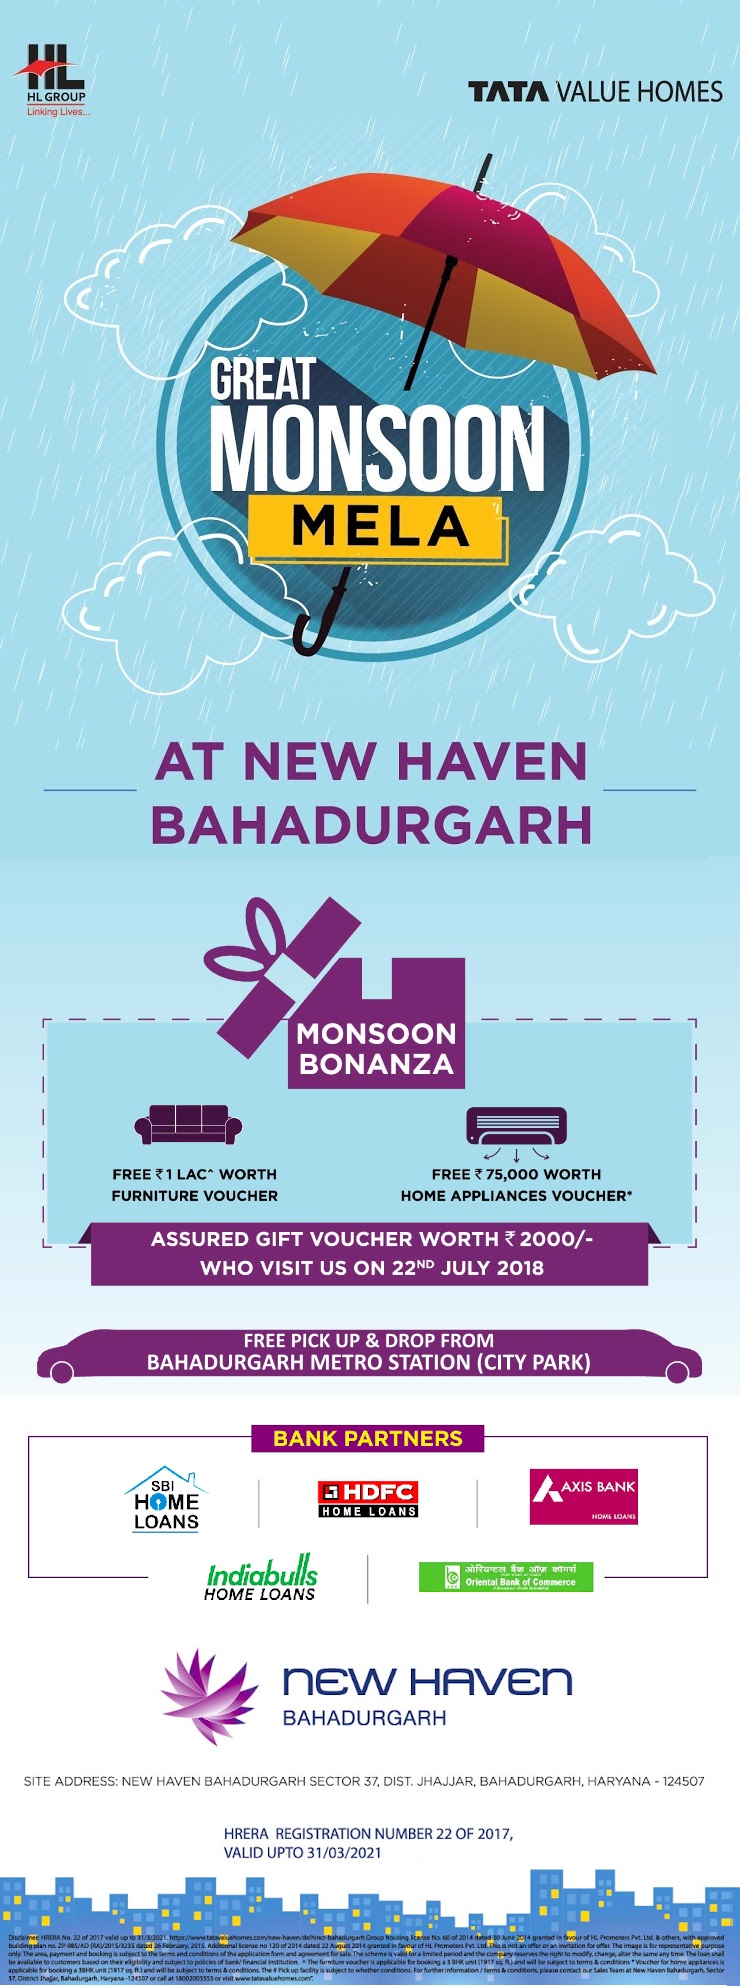 Great Monsoon Bonanza at Tata New Haven, Bahadurgarh